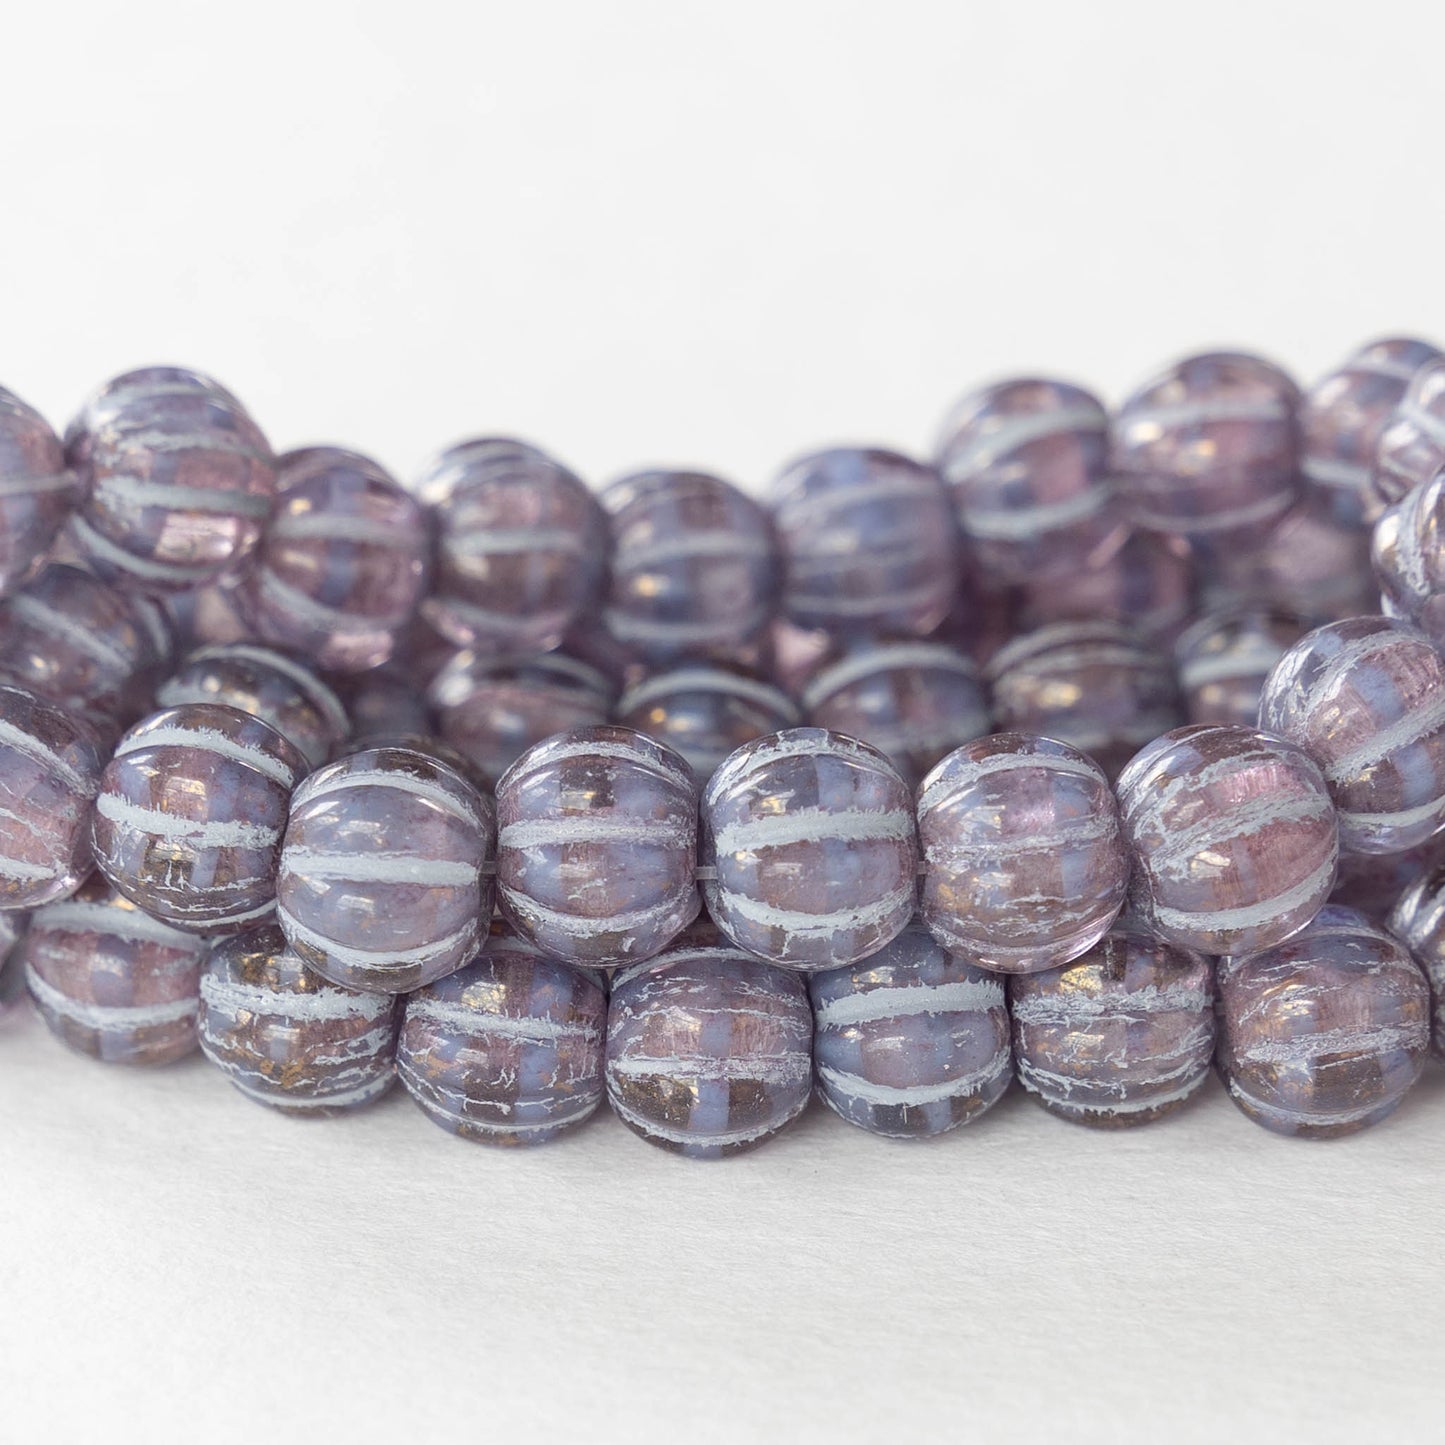 8mm Melon Beads - Opaline Lavender - 20 Beads